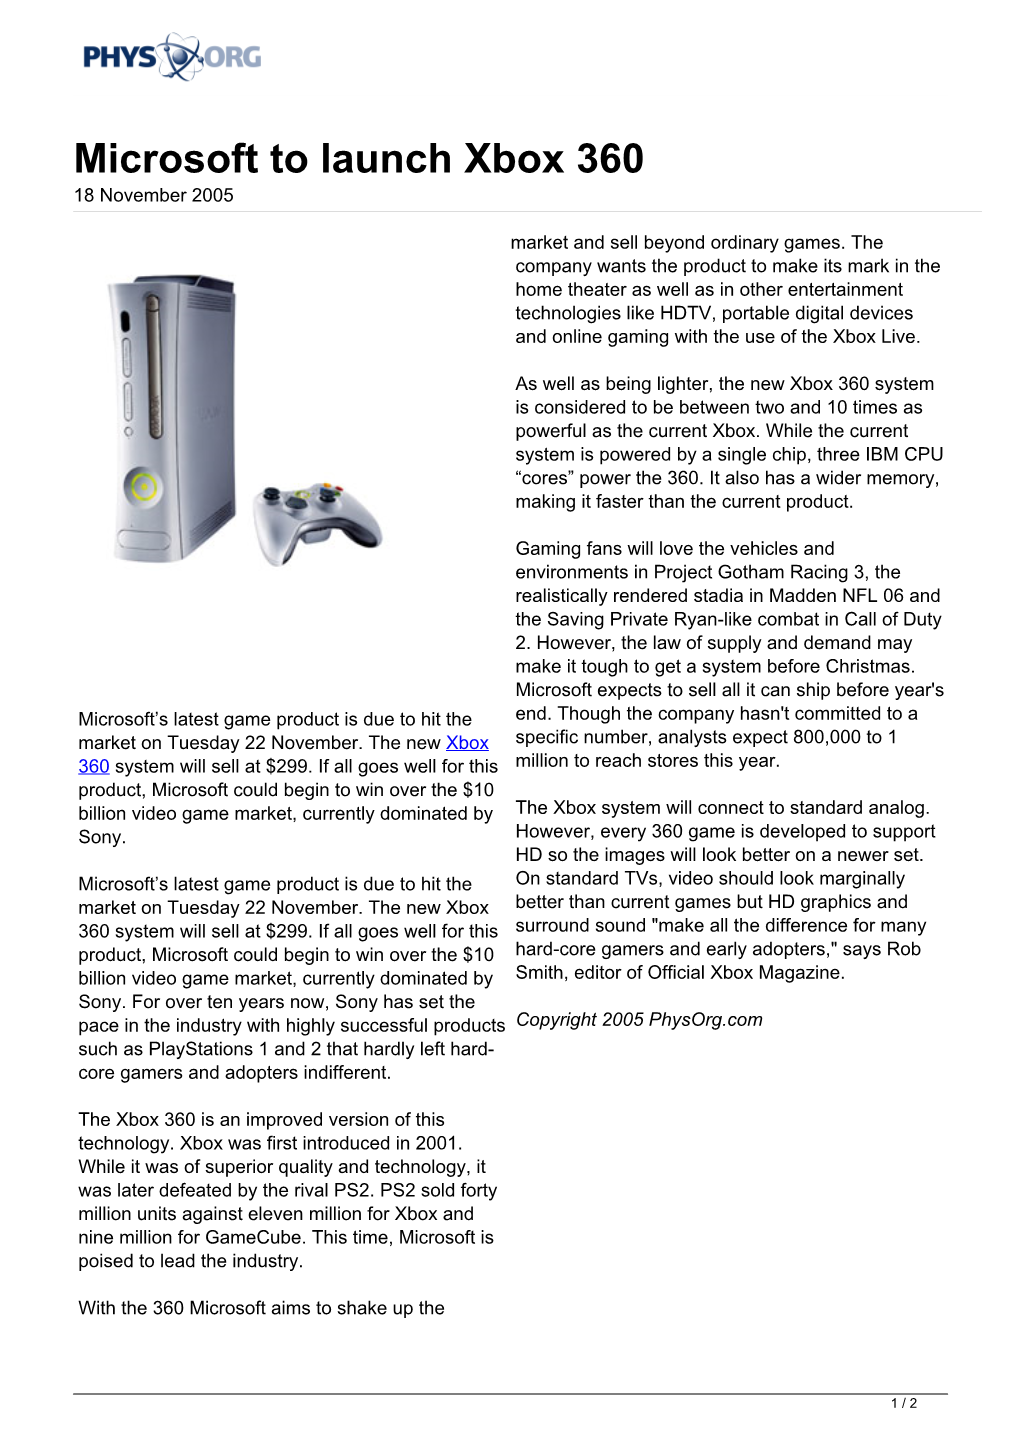 Microsoft to Launch Xbox 360 18 November 2005